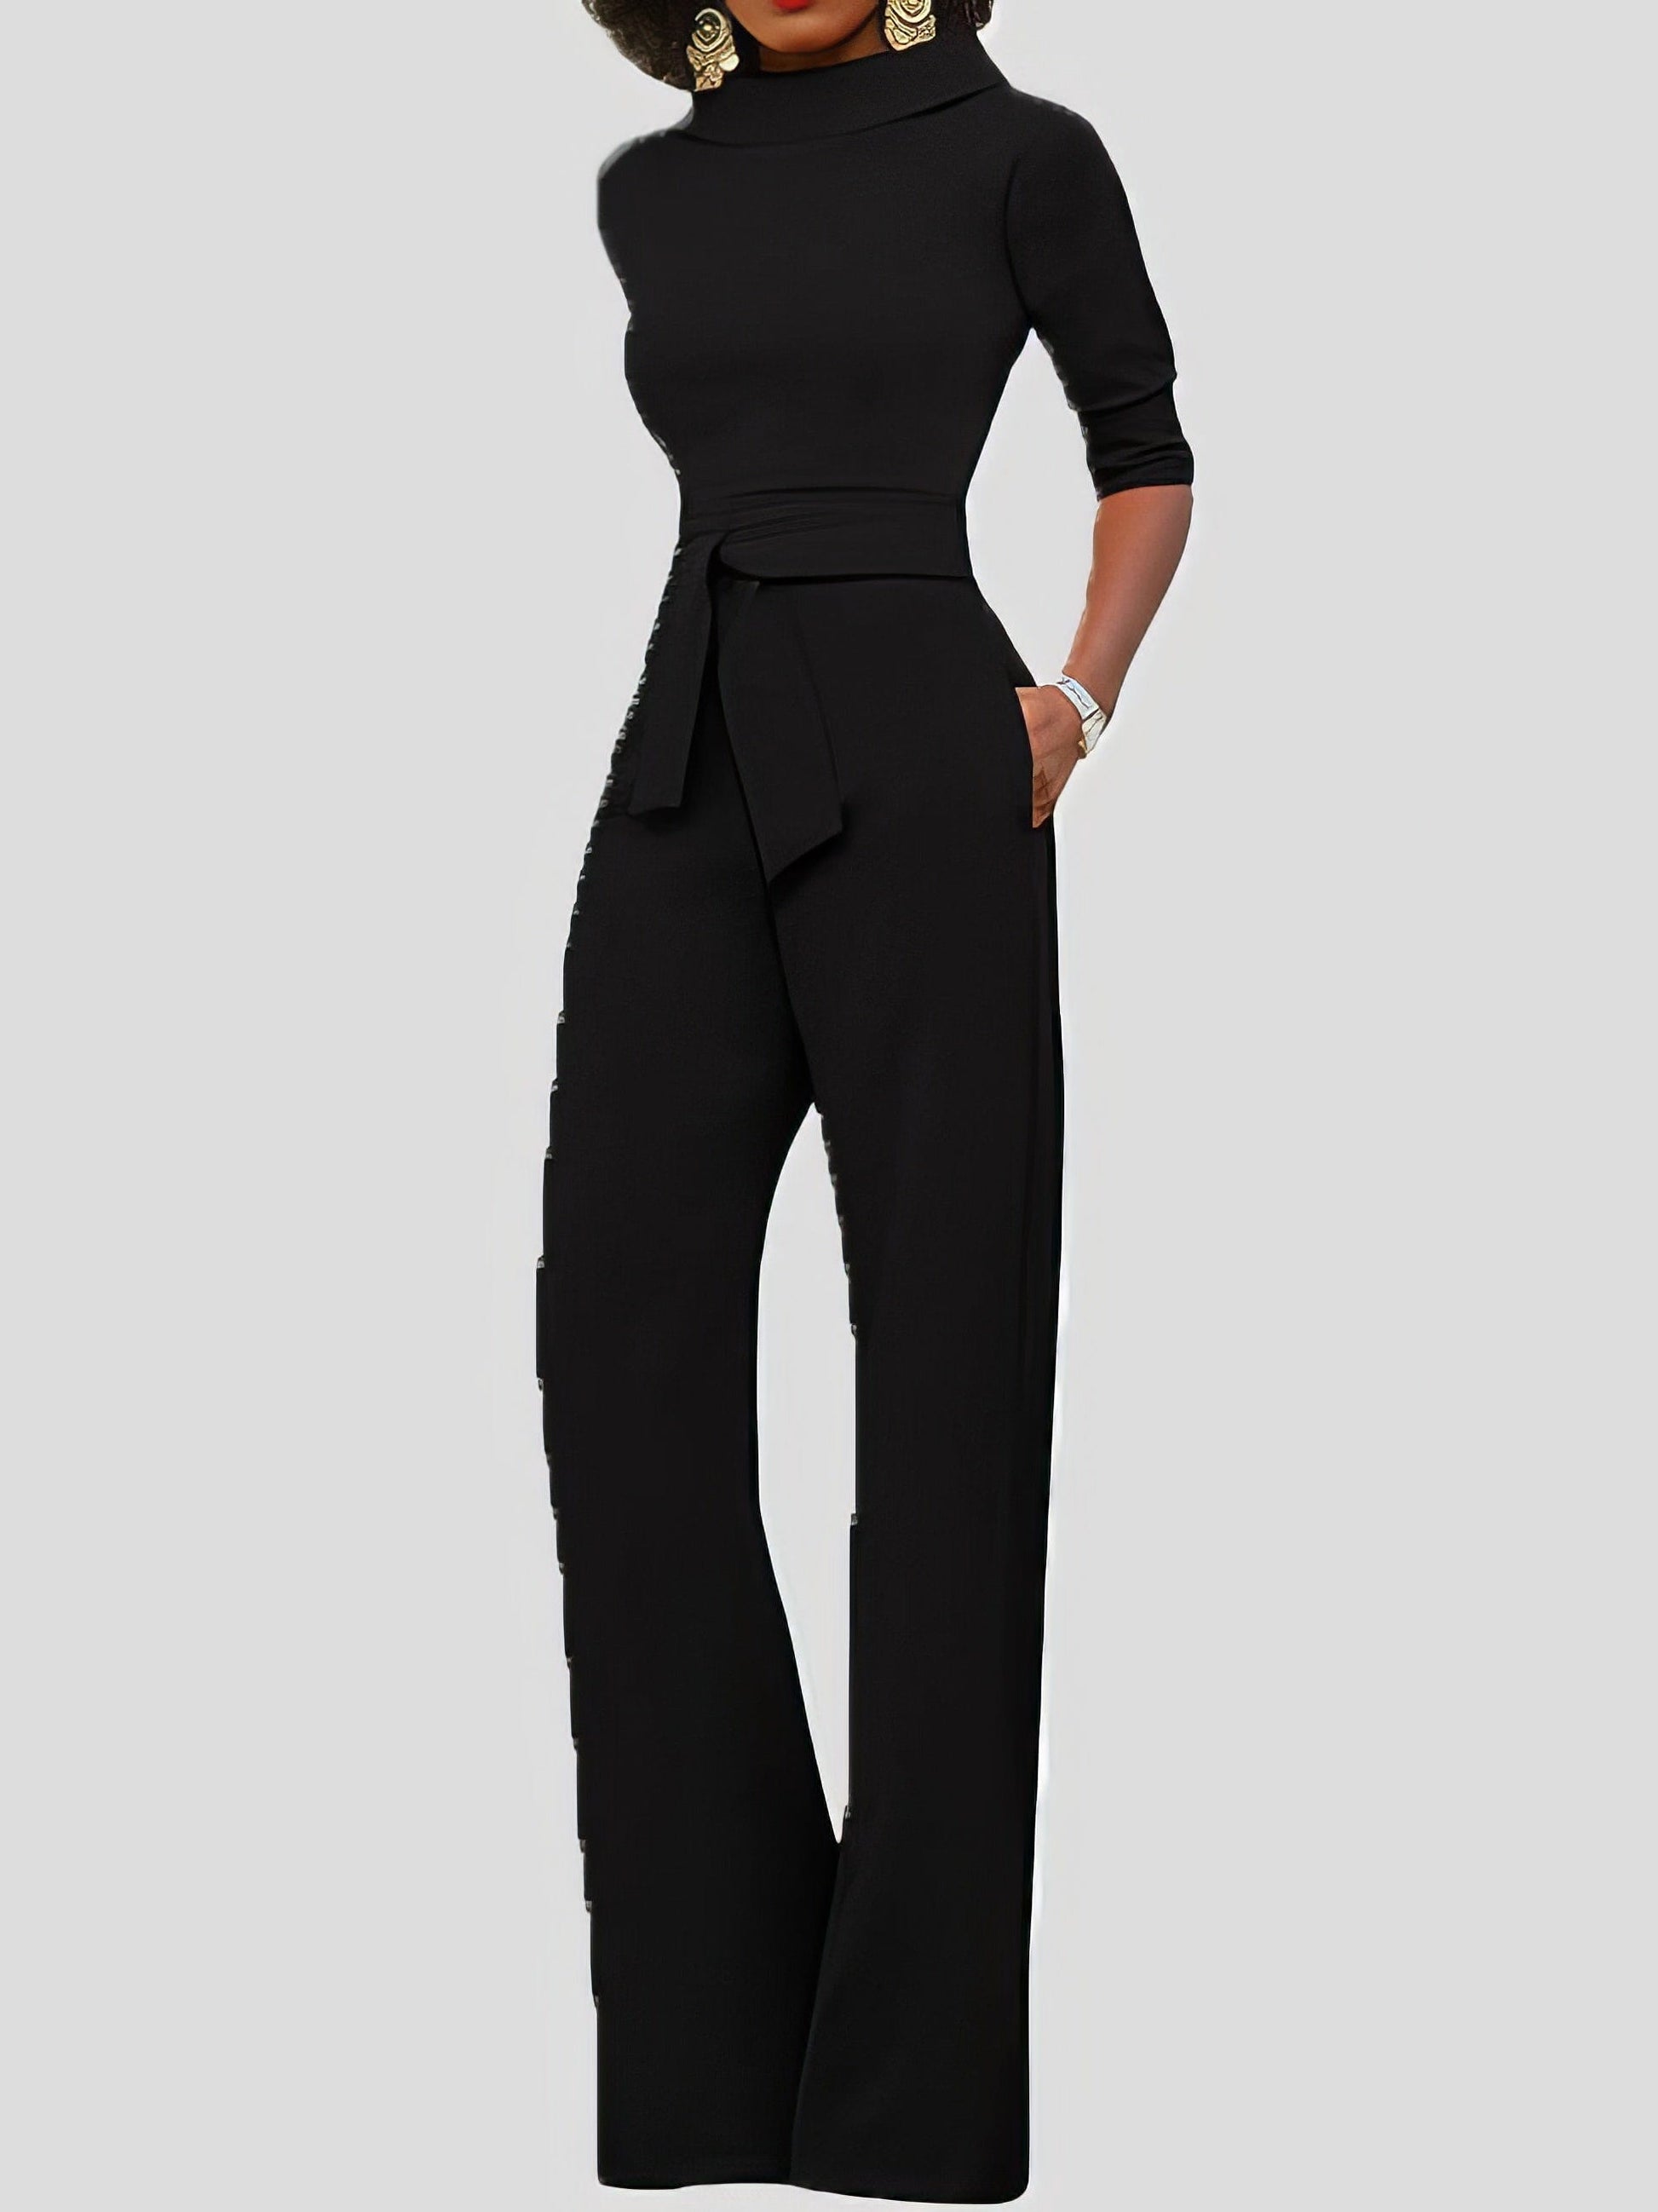 Solid Five-Point Sleeve Belted Wide-Leg Jumpsuit JUM2112291364BLAS Black / 2 (S)